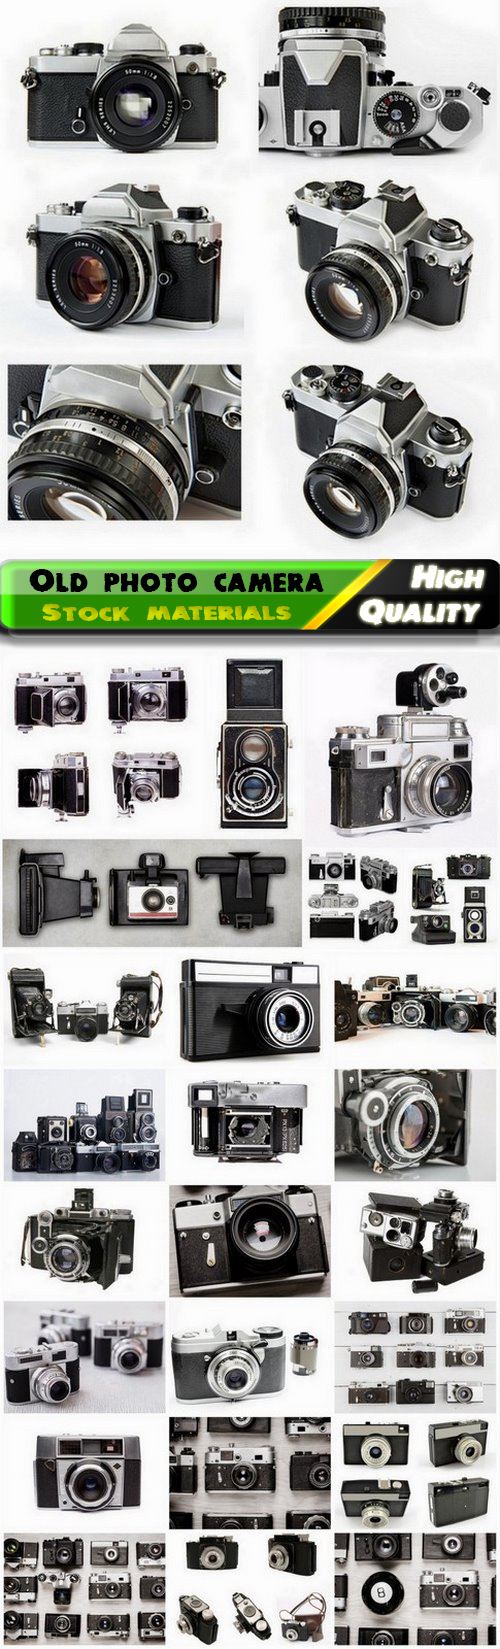 Retro old vintage photo camera - 25 HQ Jpg